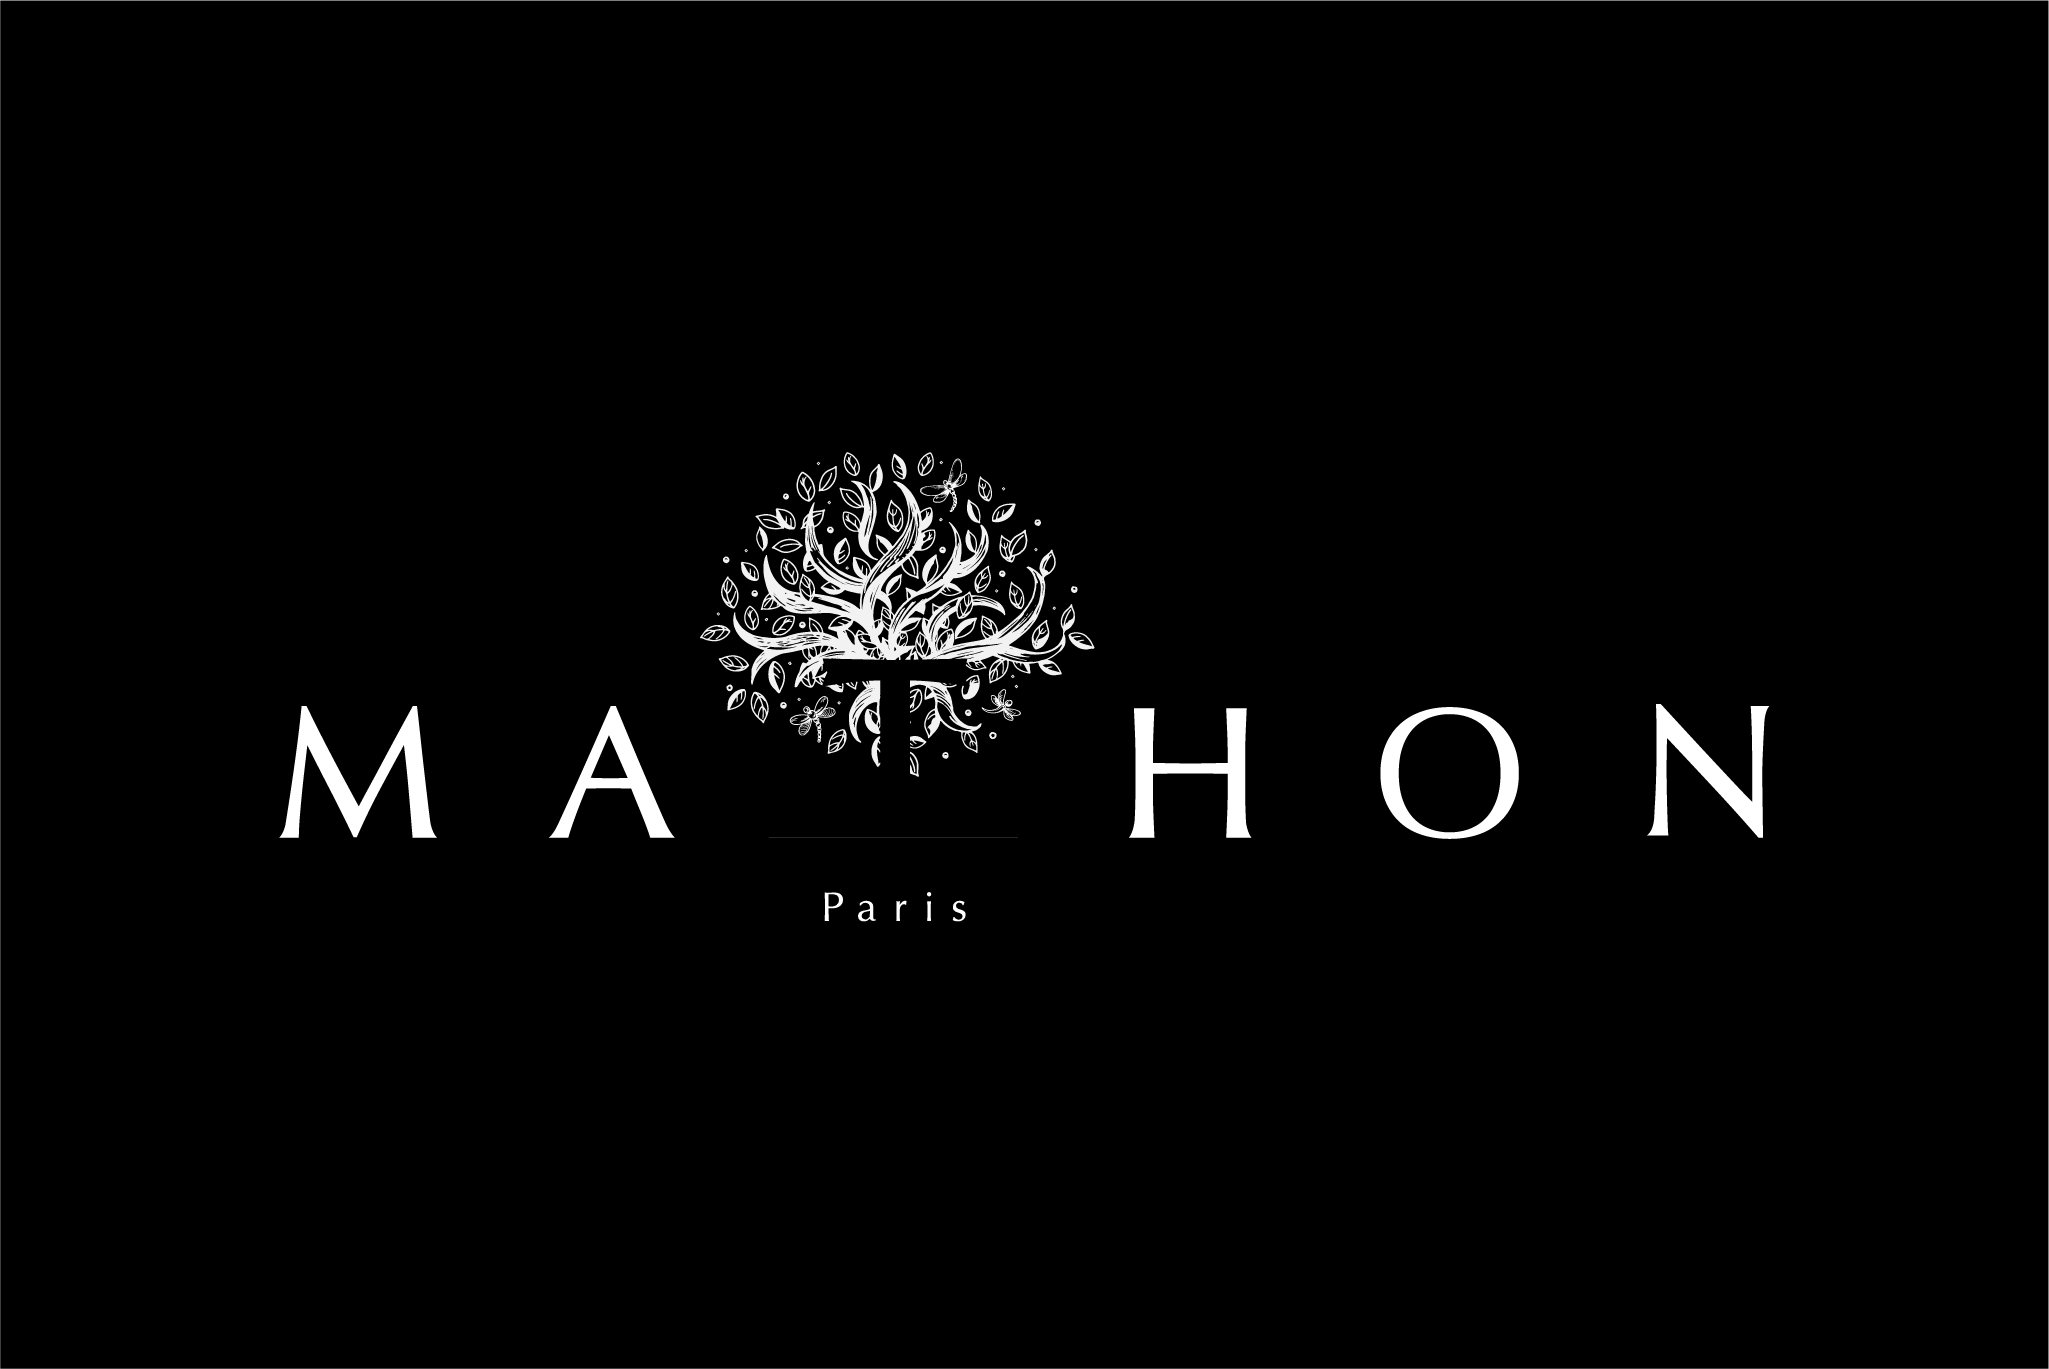 PR Mathon Paris